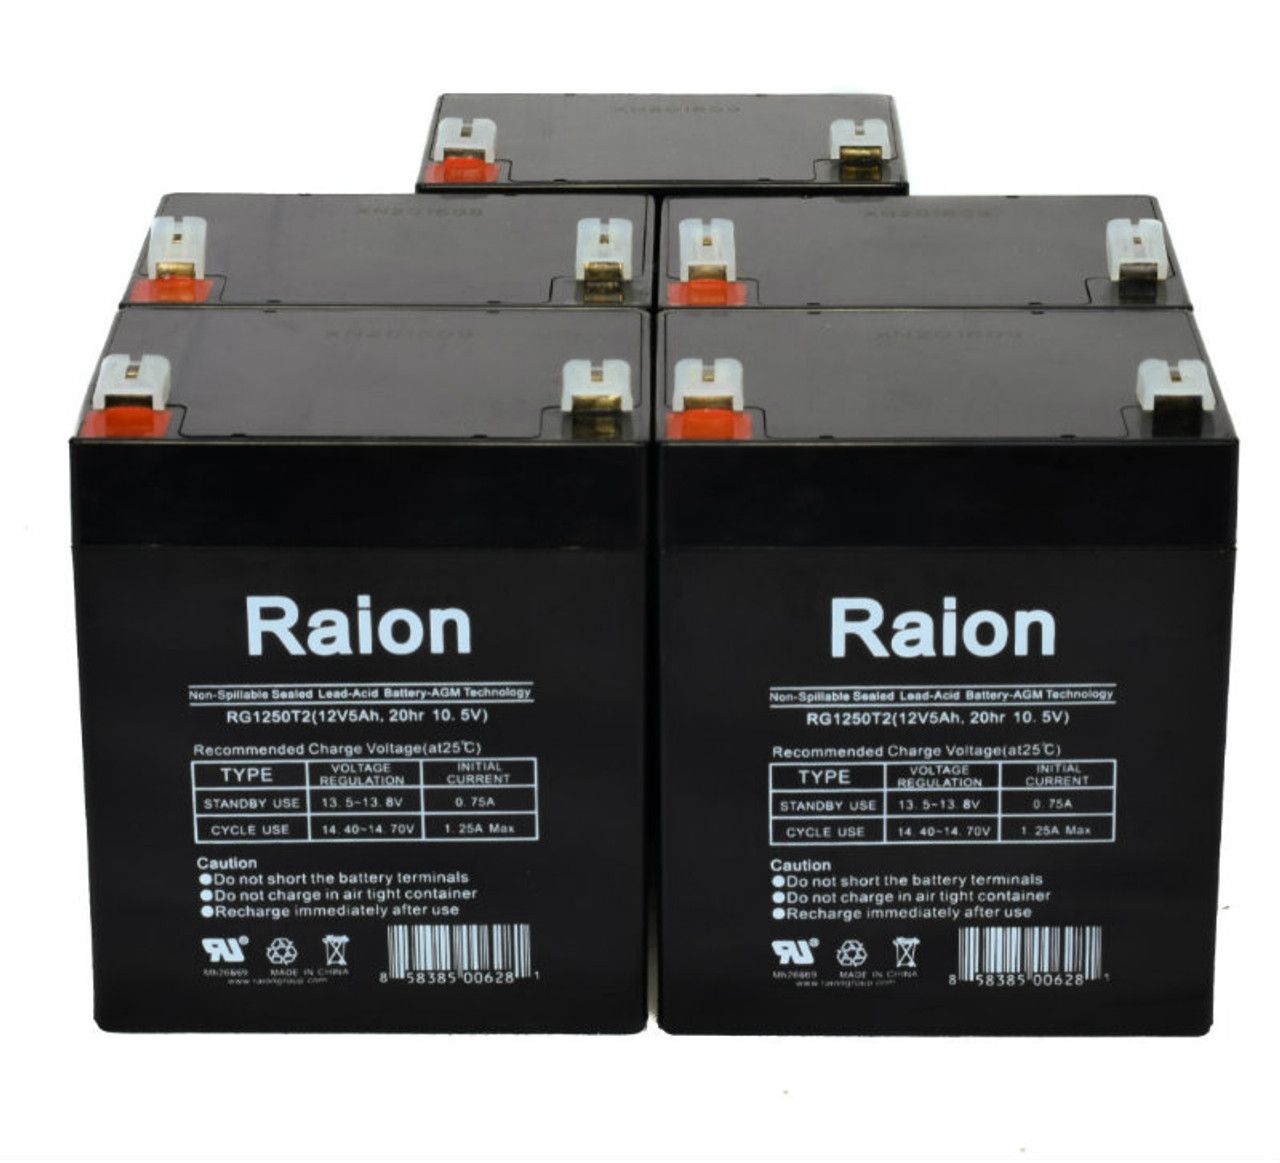 Raion Power 12V 5Ah RG1250T2 Replacement Lead Acid Battery for Black Box BAT/BBB5 - 5 Pack